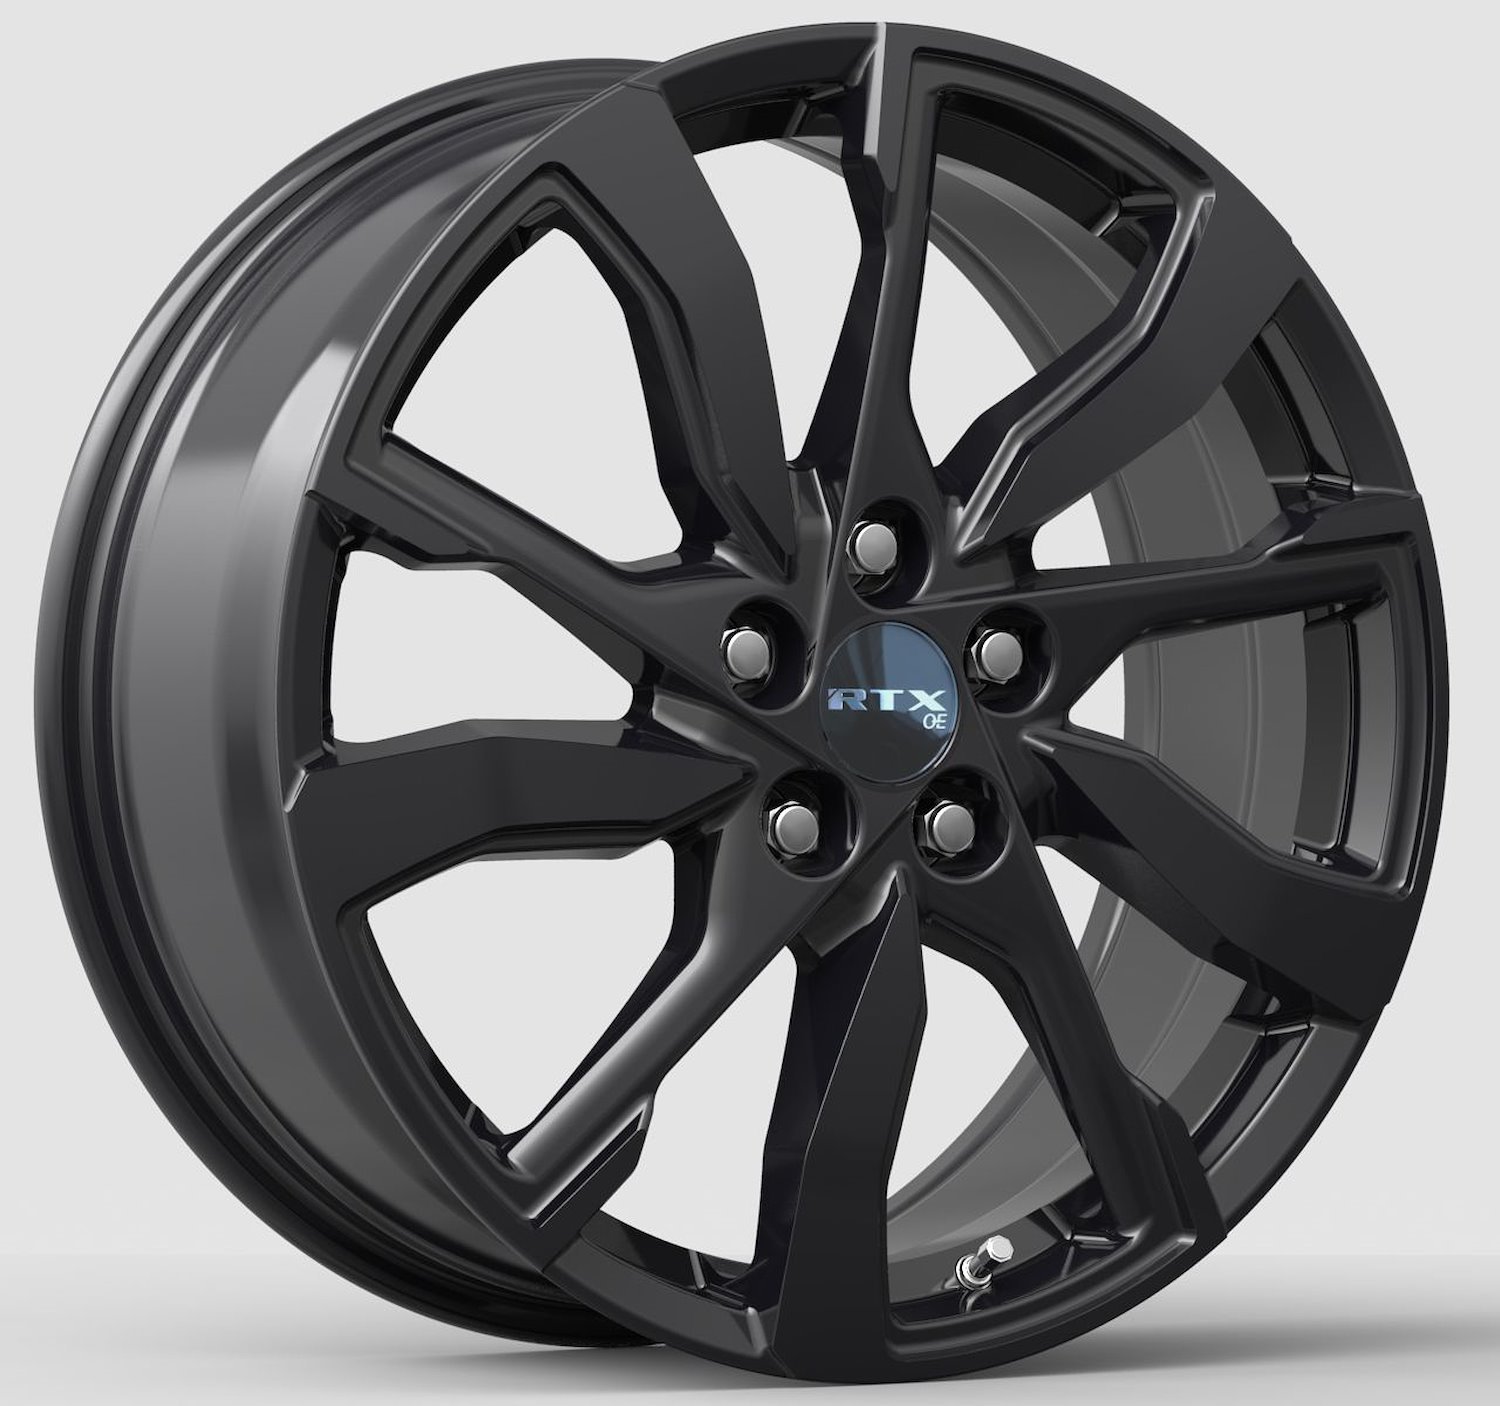 083268 OE-Series GM-07 Wheel [Size: 18" x 7"] Gloss Black Finish